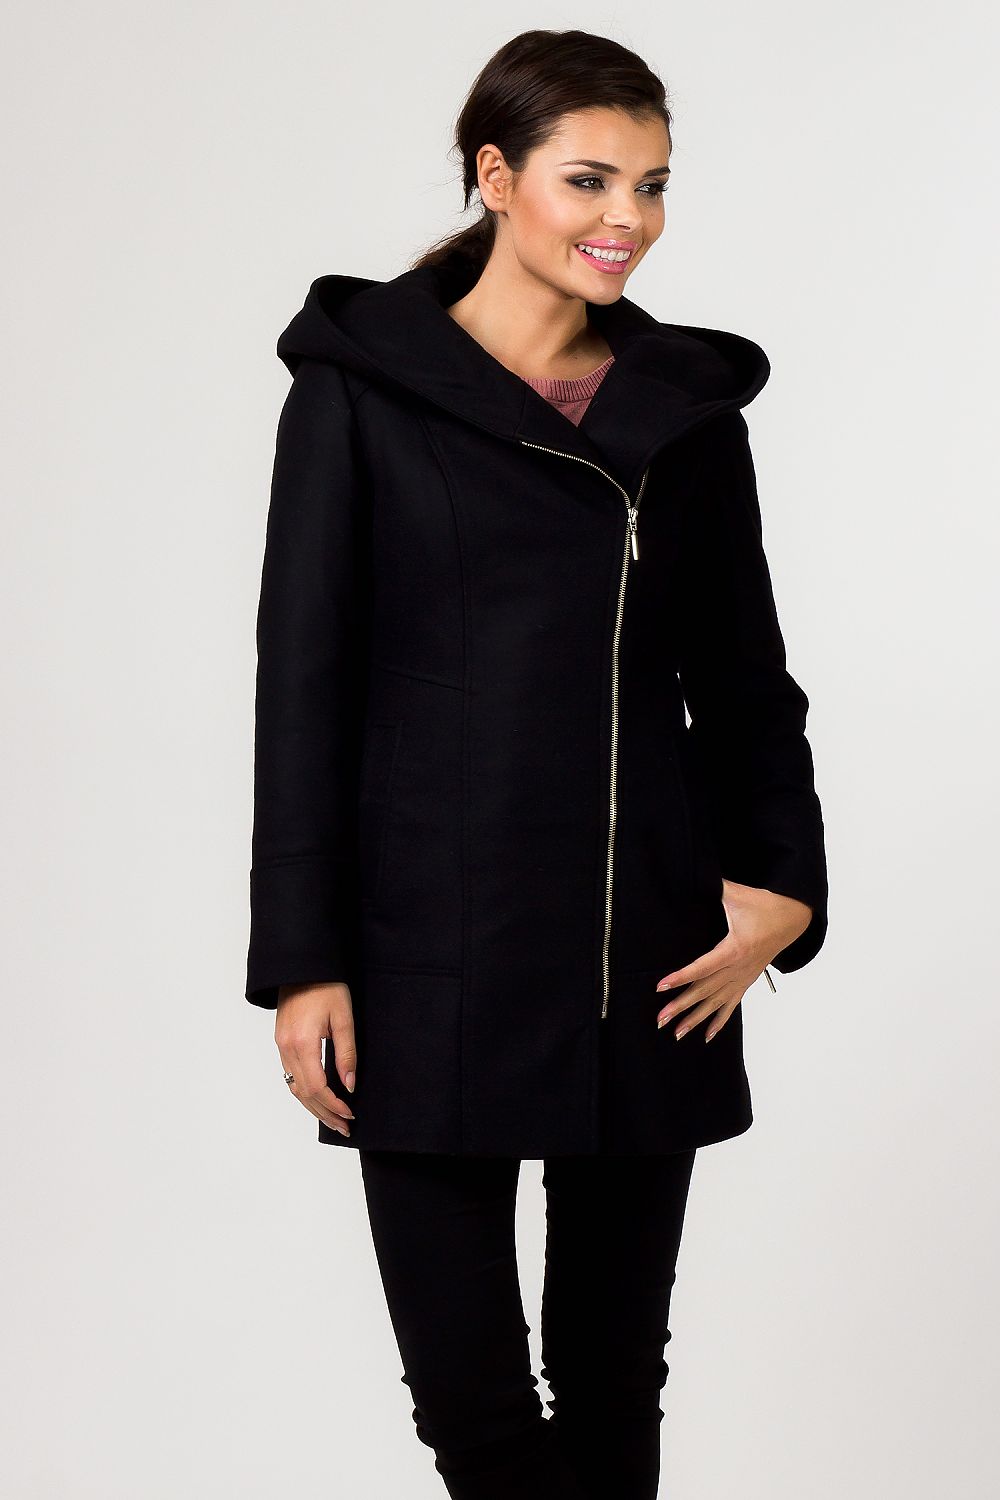 Coat model 35260 Reve Women`s Coats, Jackets Wholesale Clothing Matterhorn